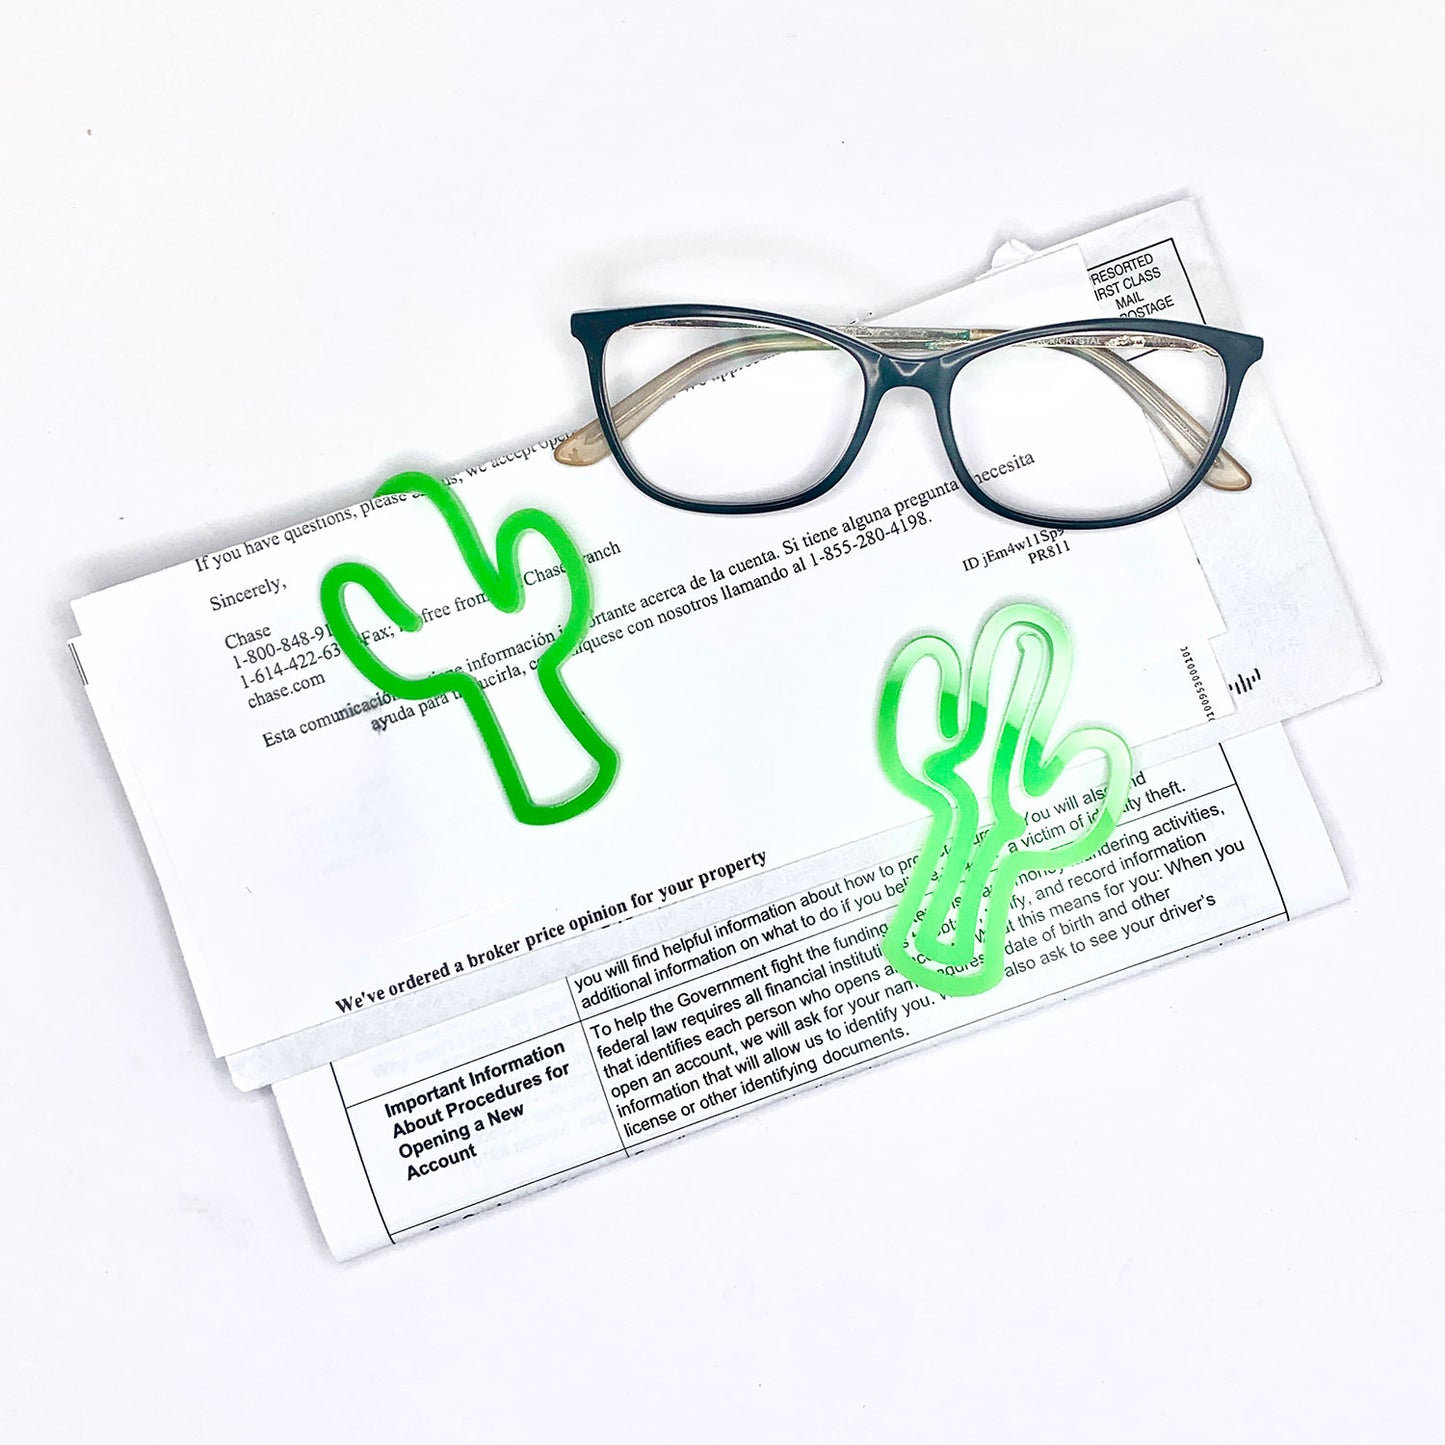 Cactus-Shaped Bookmark - Paperclip - Snack Bag Closure